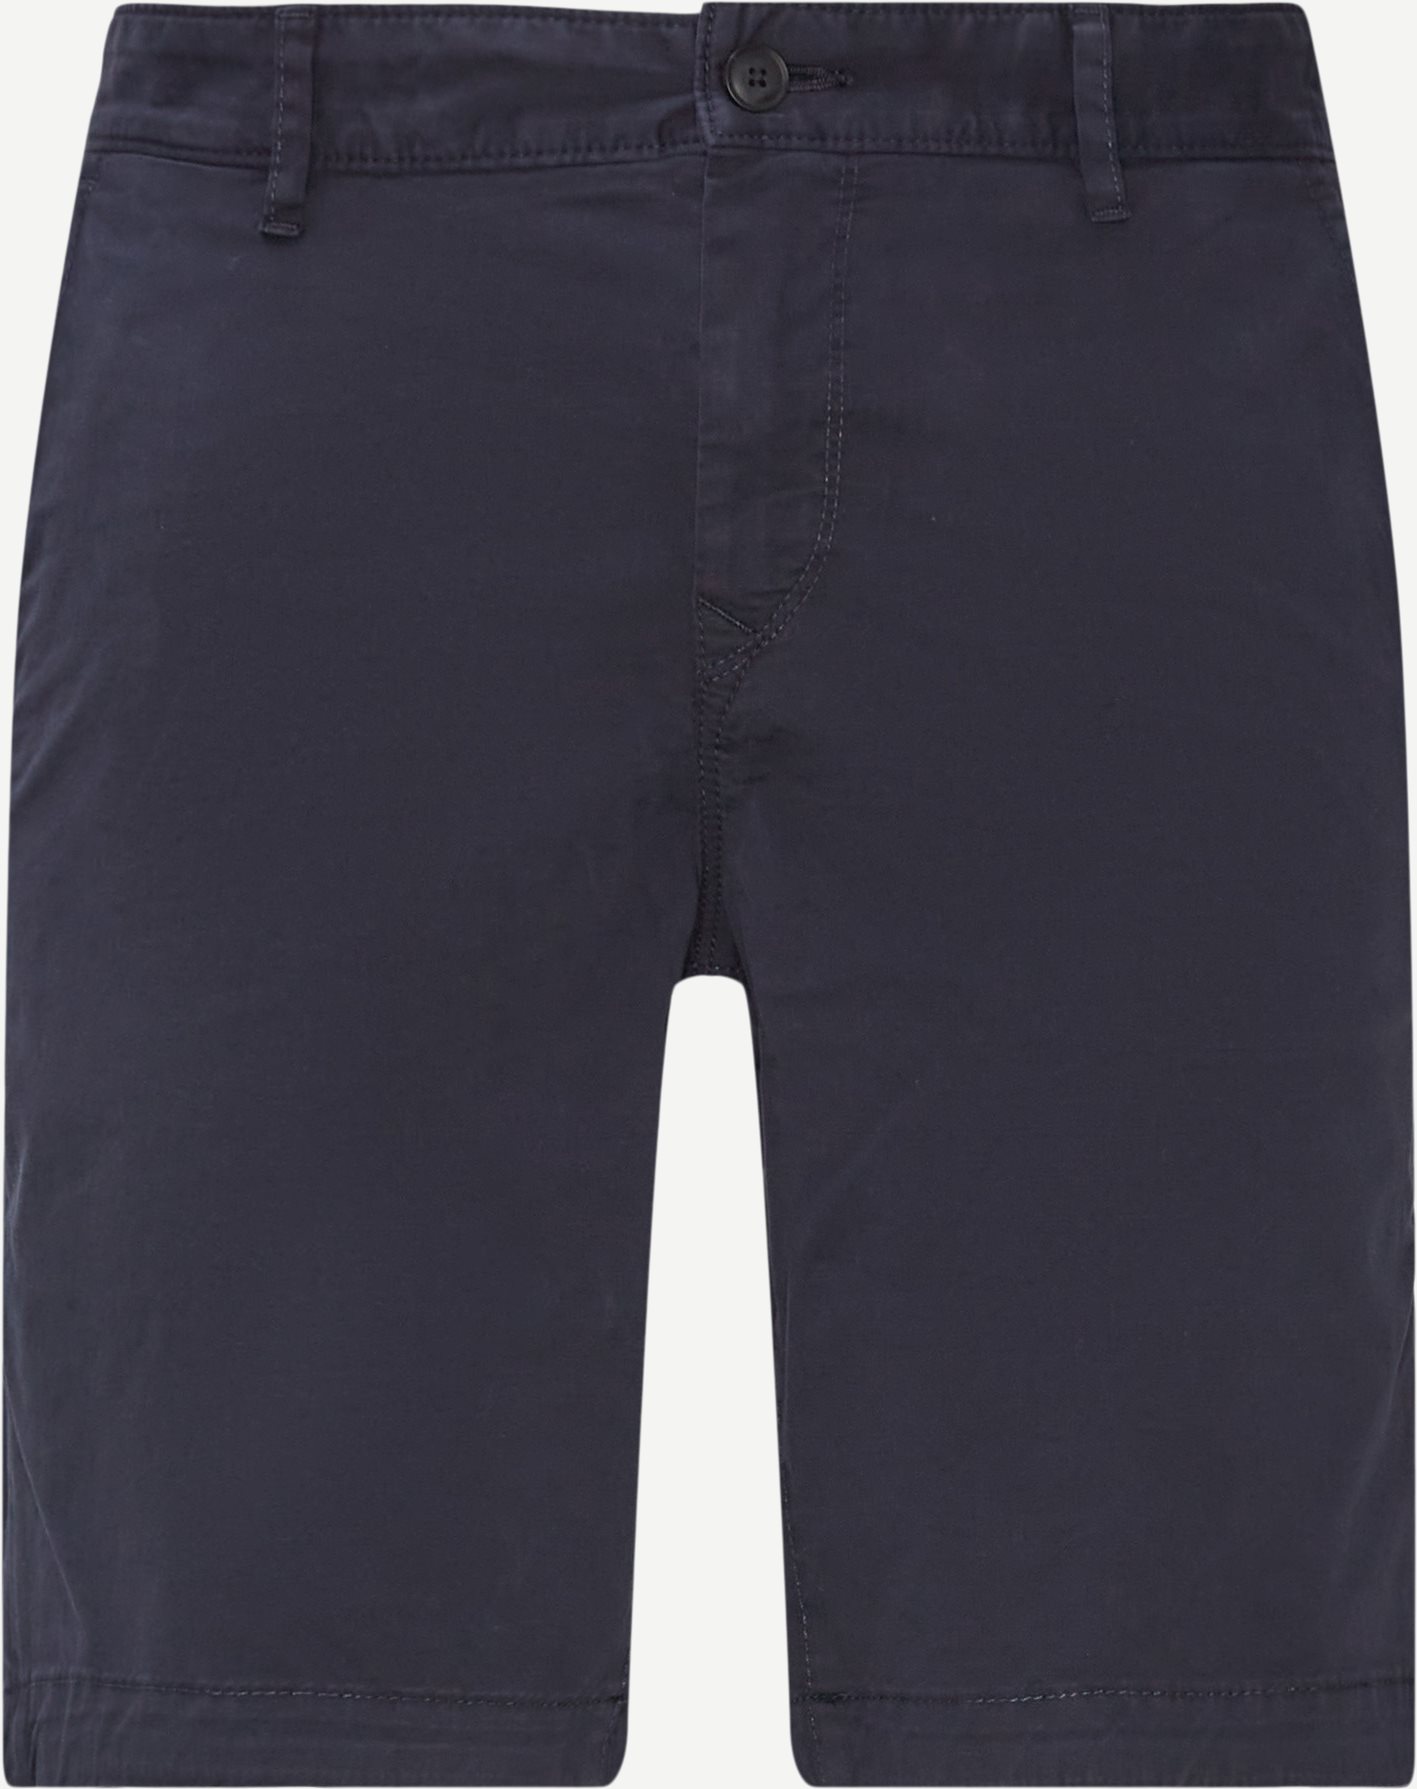 Shorts - Slim fit - Blue